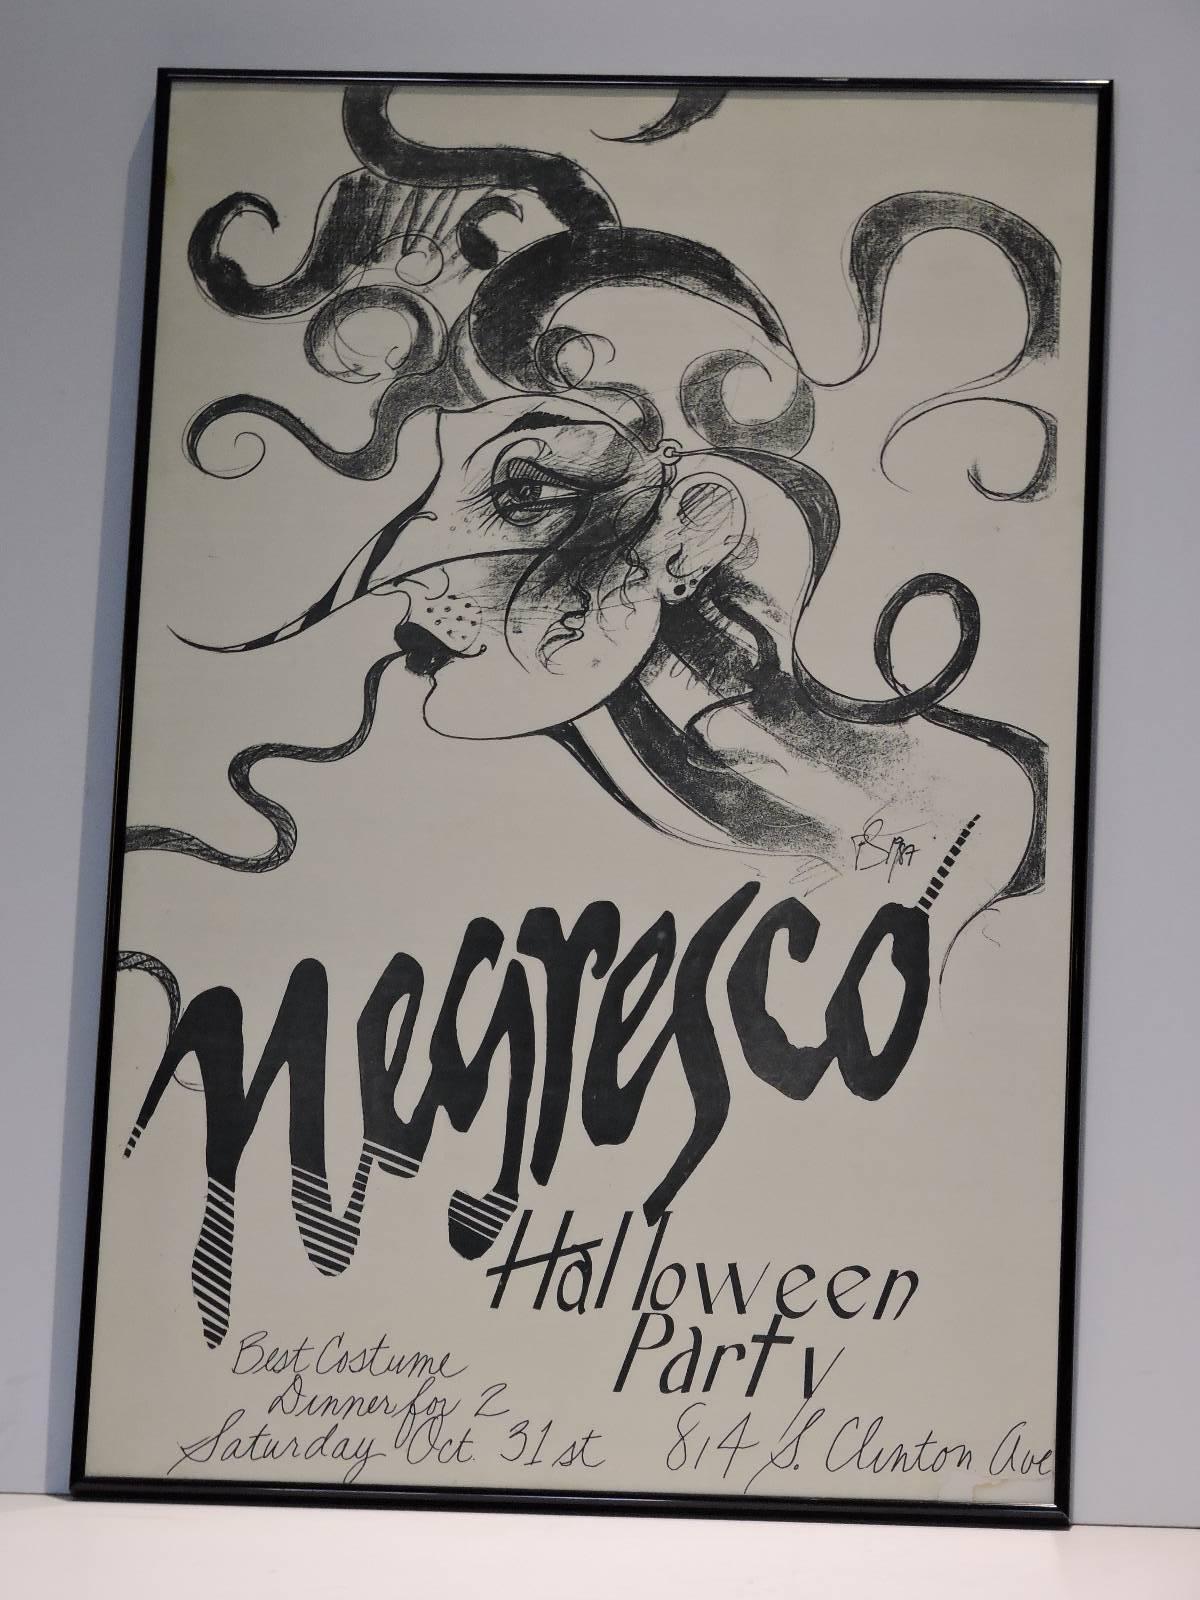 Negresco Halloween Party Poster by Ramon Santiago, 1987 2